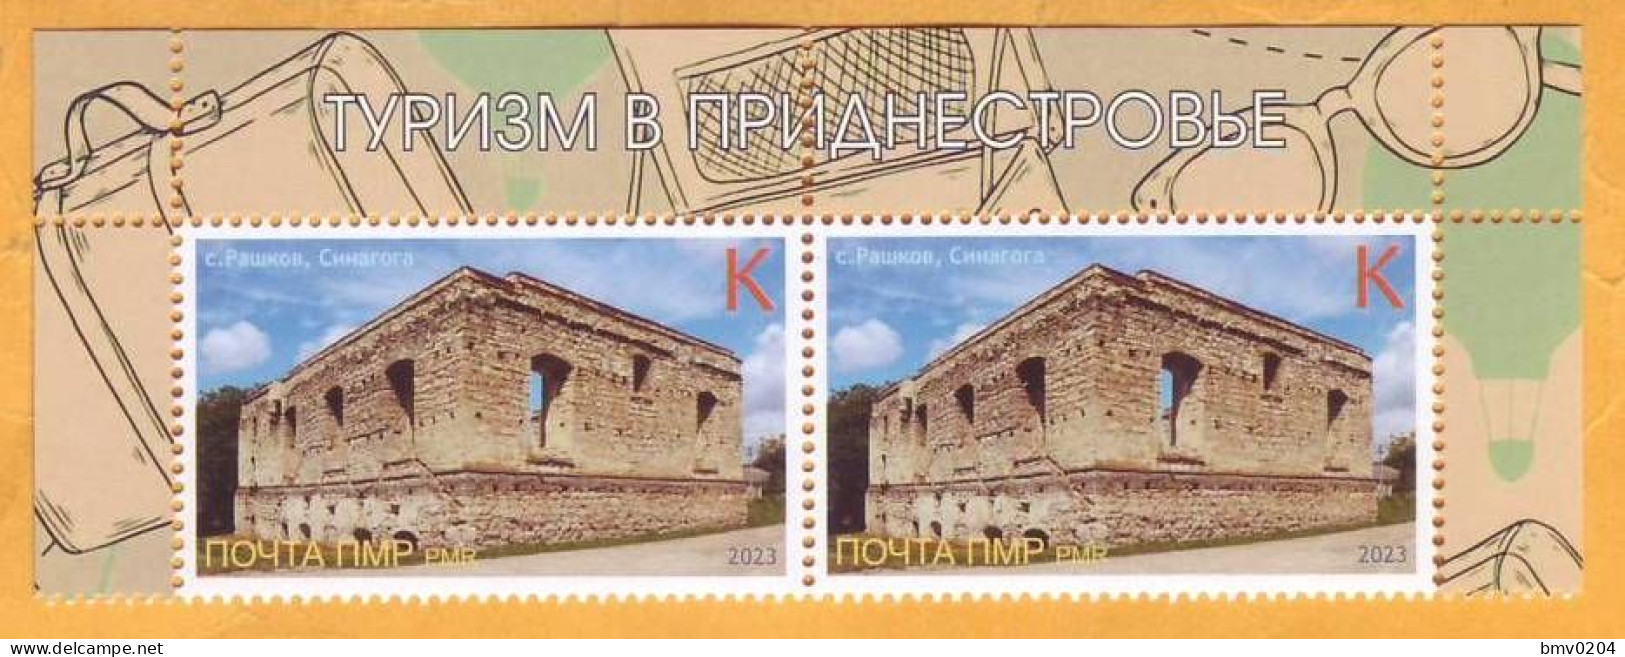 2023 Moldova Transnistria Tiraspol Ruins Of A Synagogue In The Village Of Rashkov, Hasicism, Jewish Community, 2v Mint - Moldavia